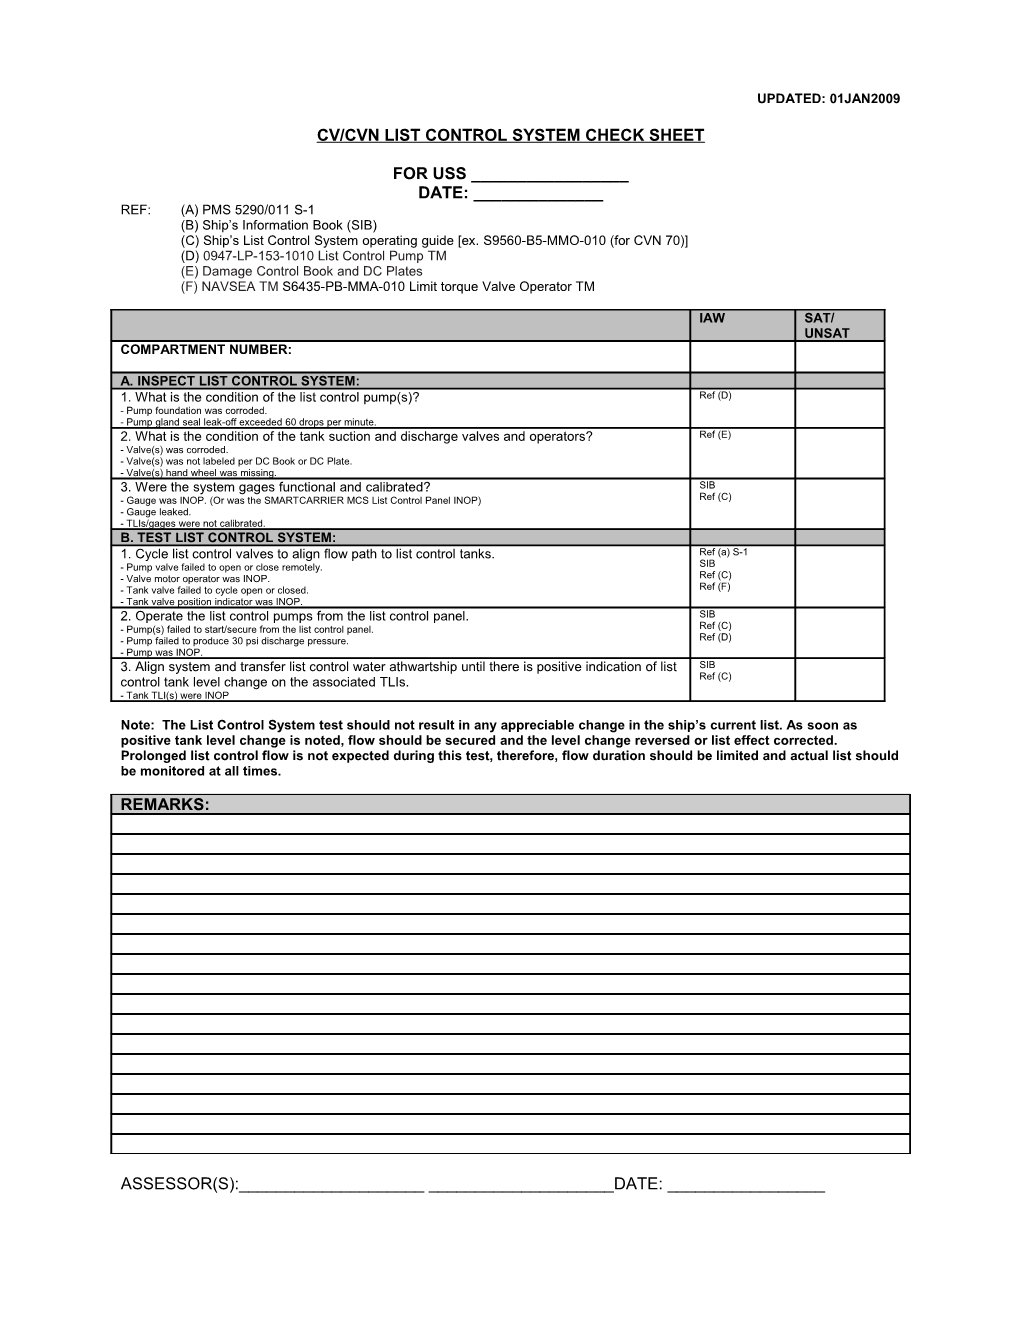 Cv/Cvn List Control System Check Sheet